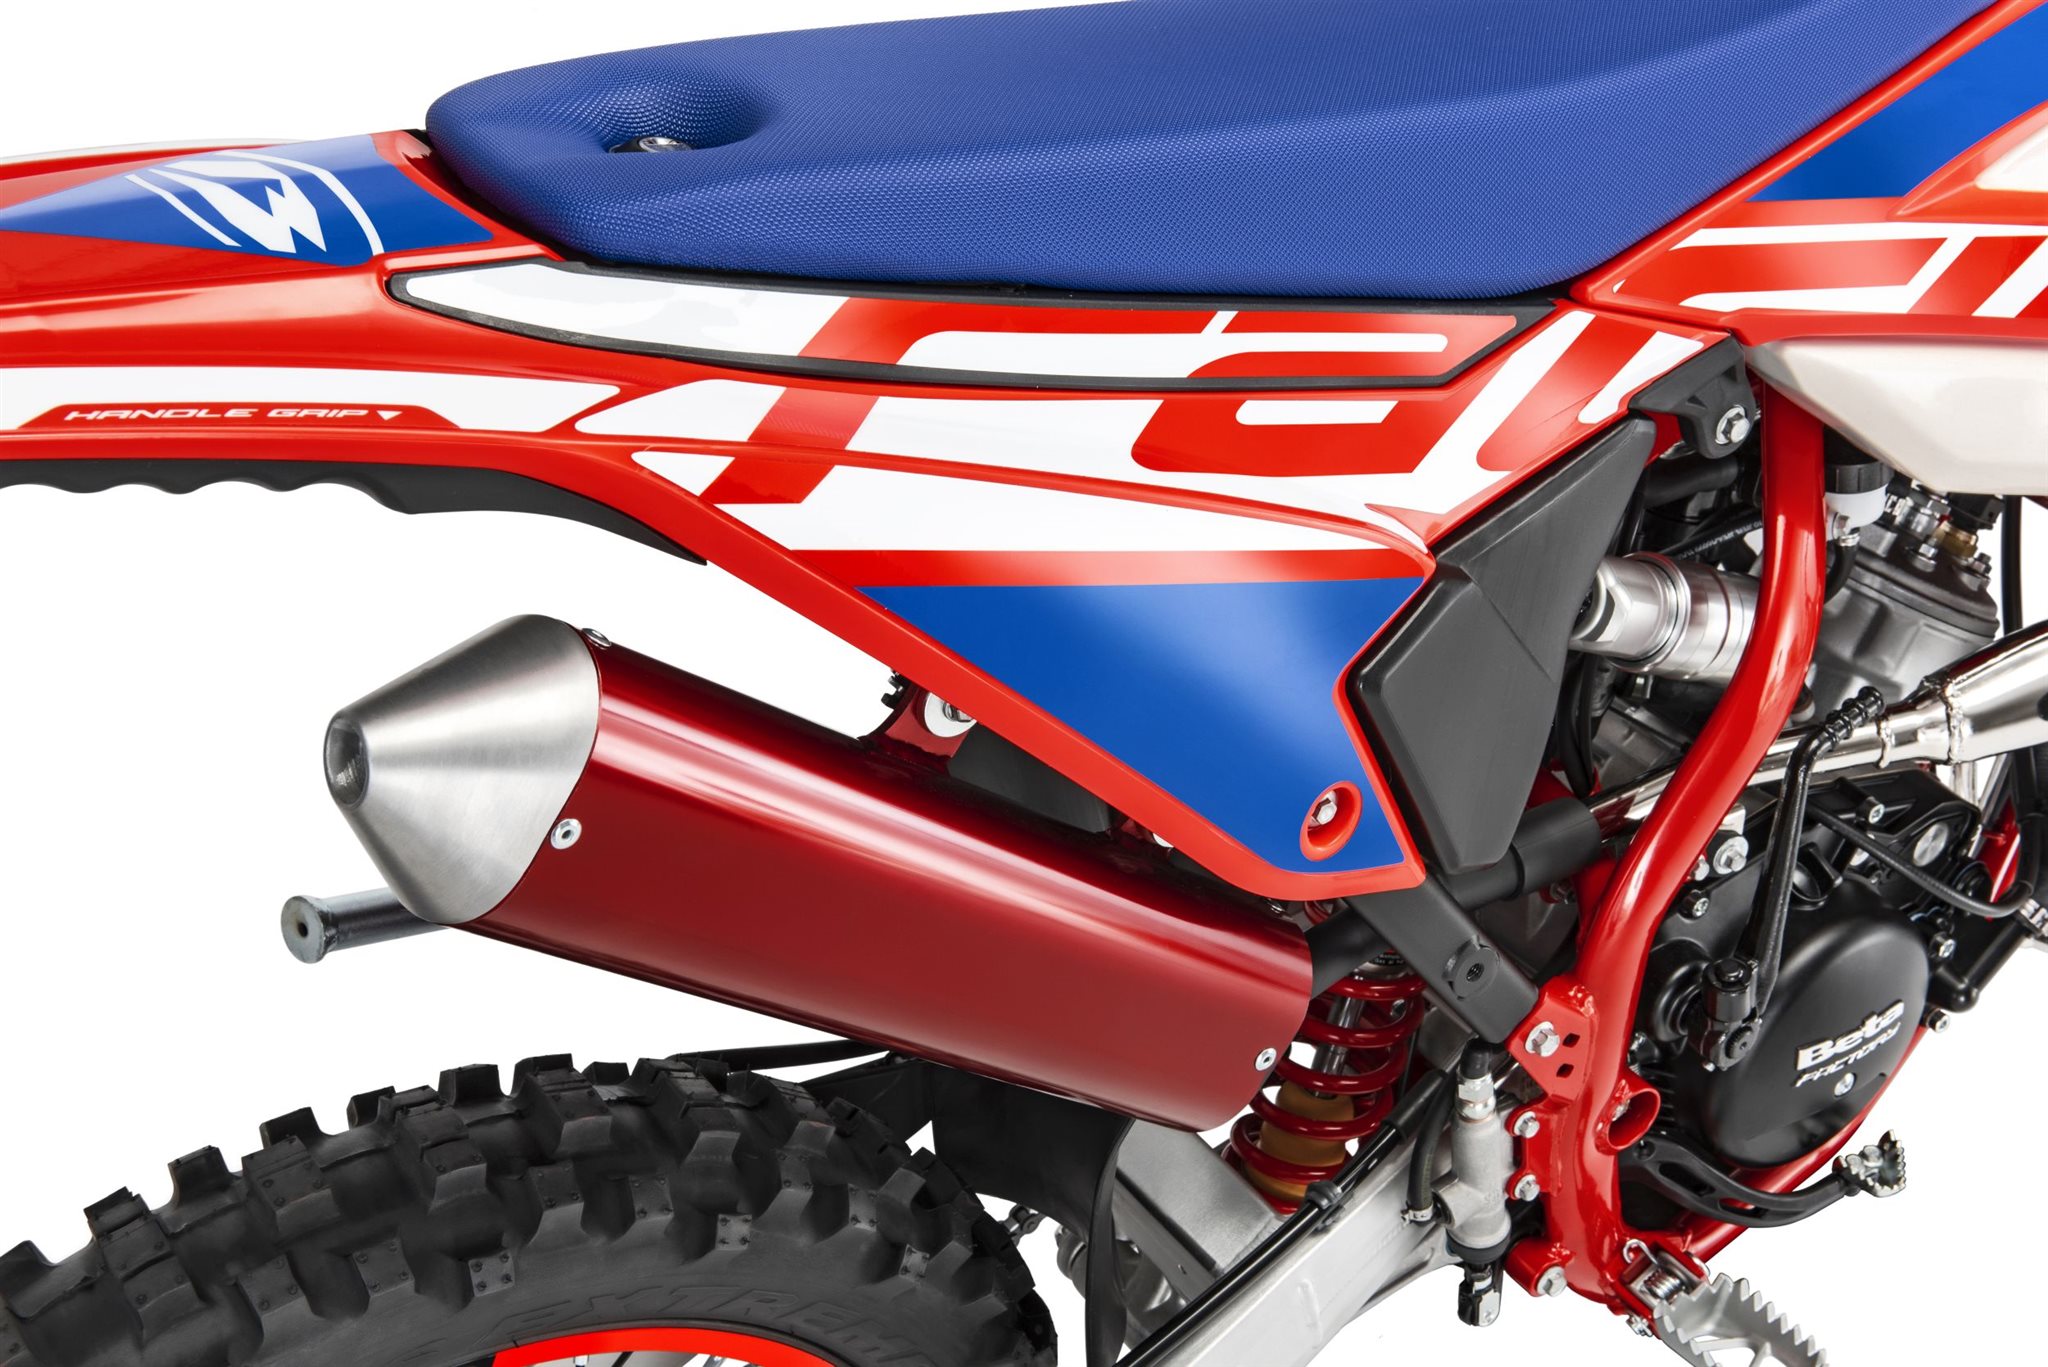 Neue Beta RR 50 Enduro Racing Motorräder kaufen